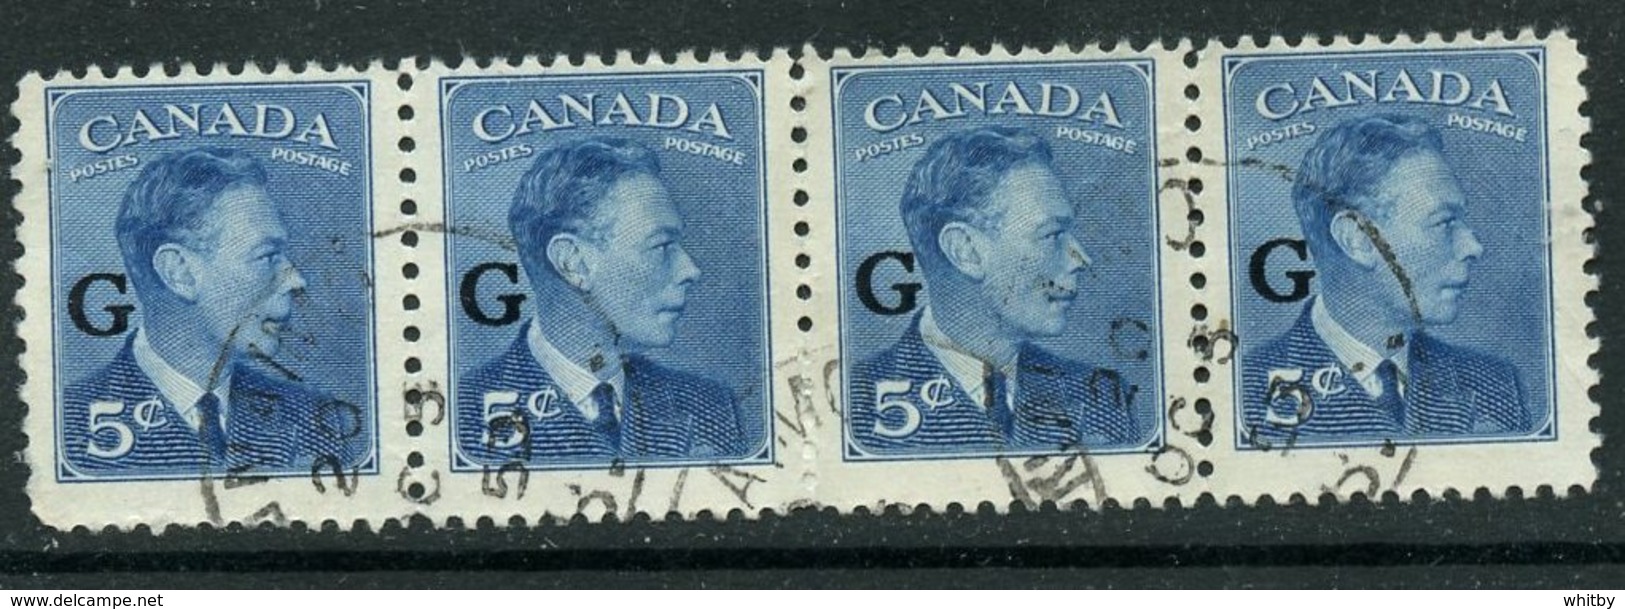 Canada 1950 5 Cent King George VI G Overprint Issue #O20 Strip Of 4 - Opdrukken